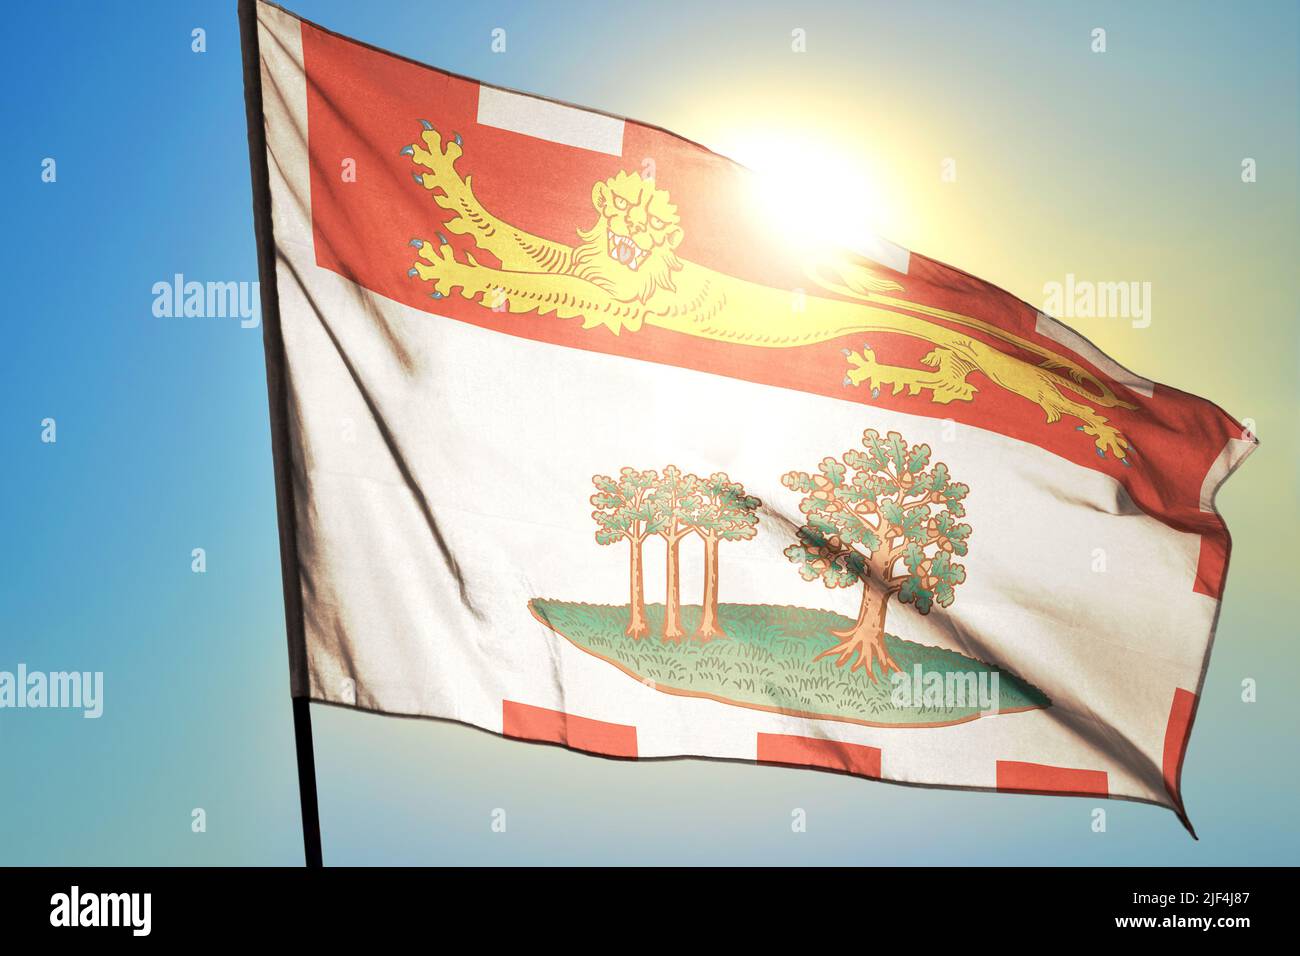 Prince Edward Island province of Canada flag waving on the wind Stock Photo